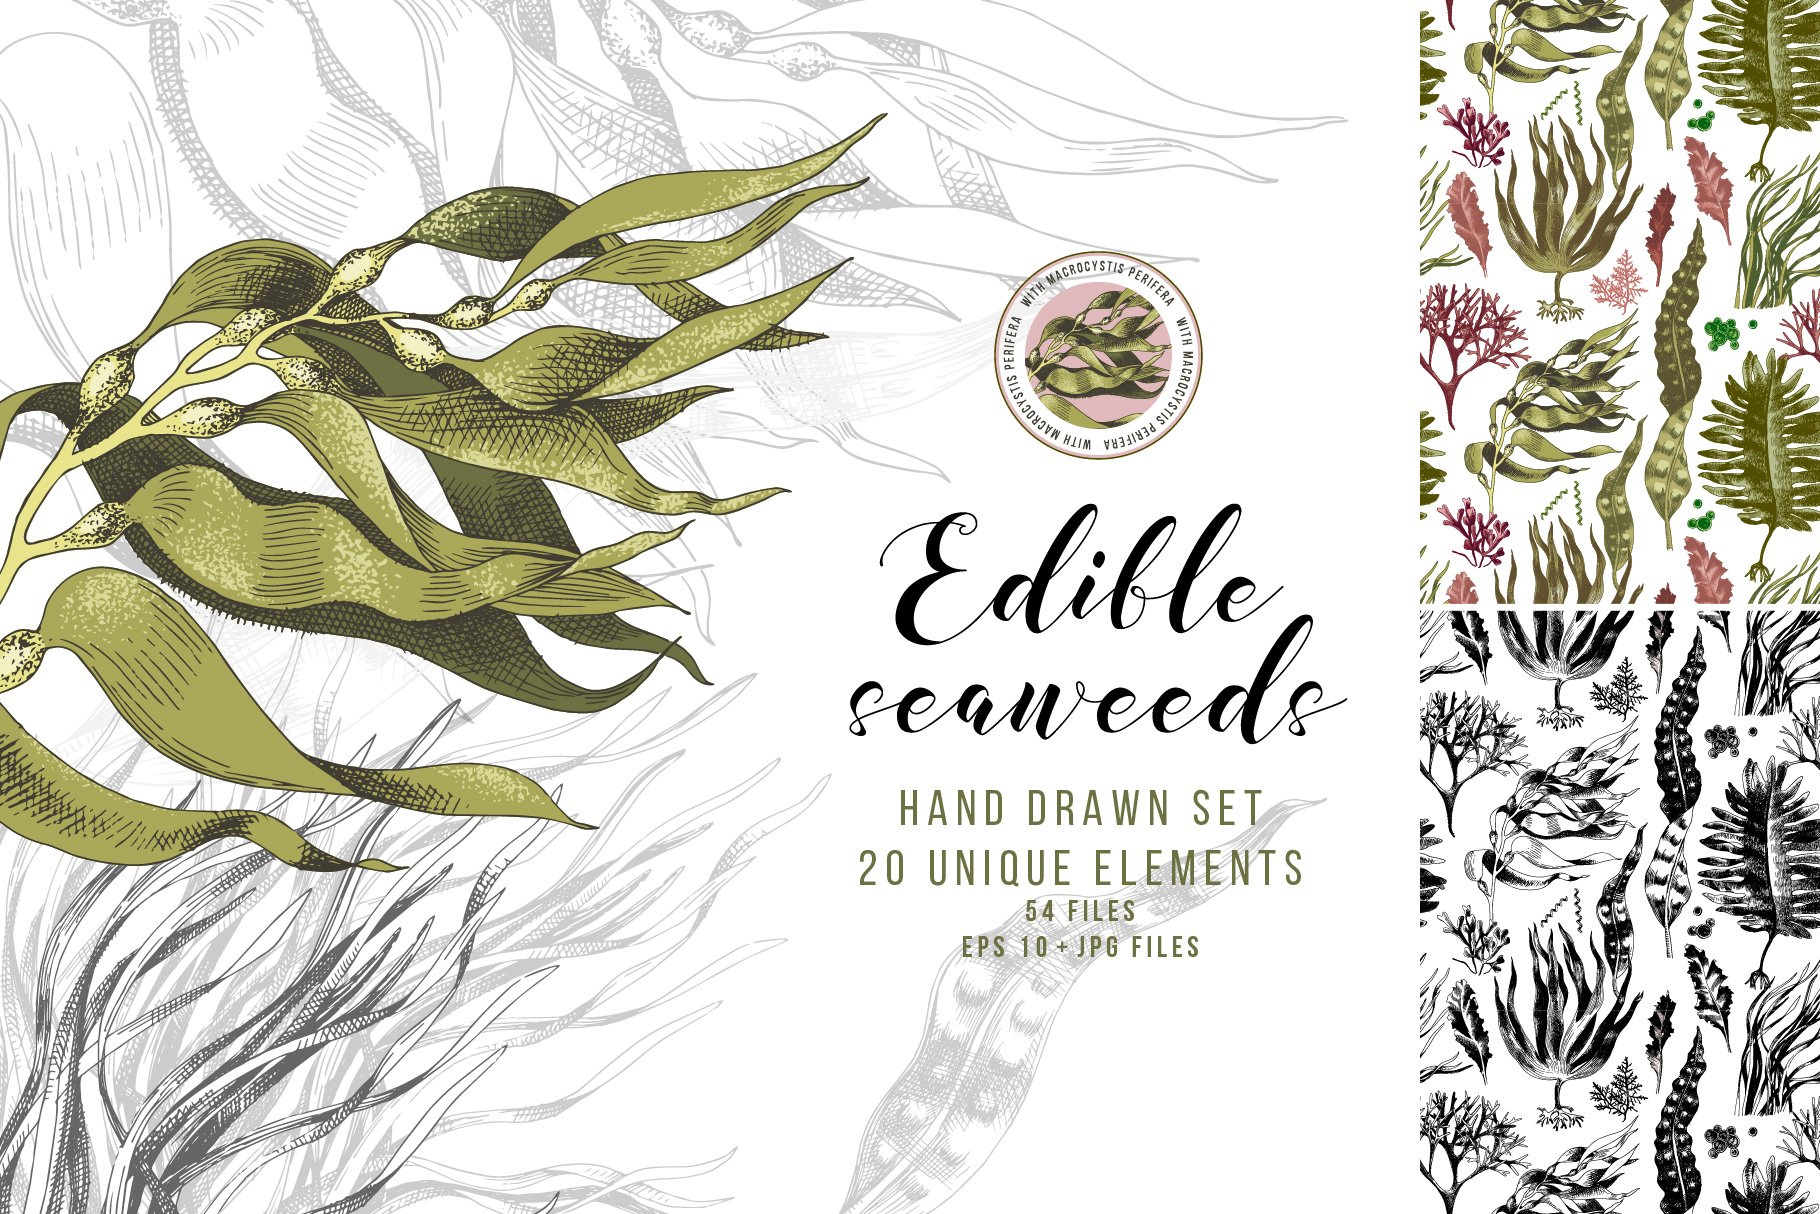 Hand drawn edible seaweeds cover image.